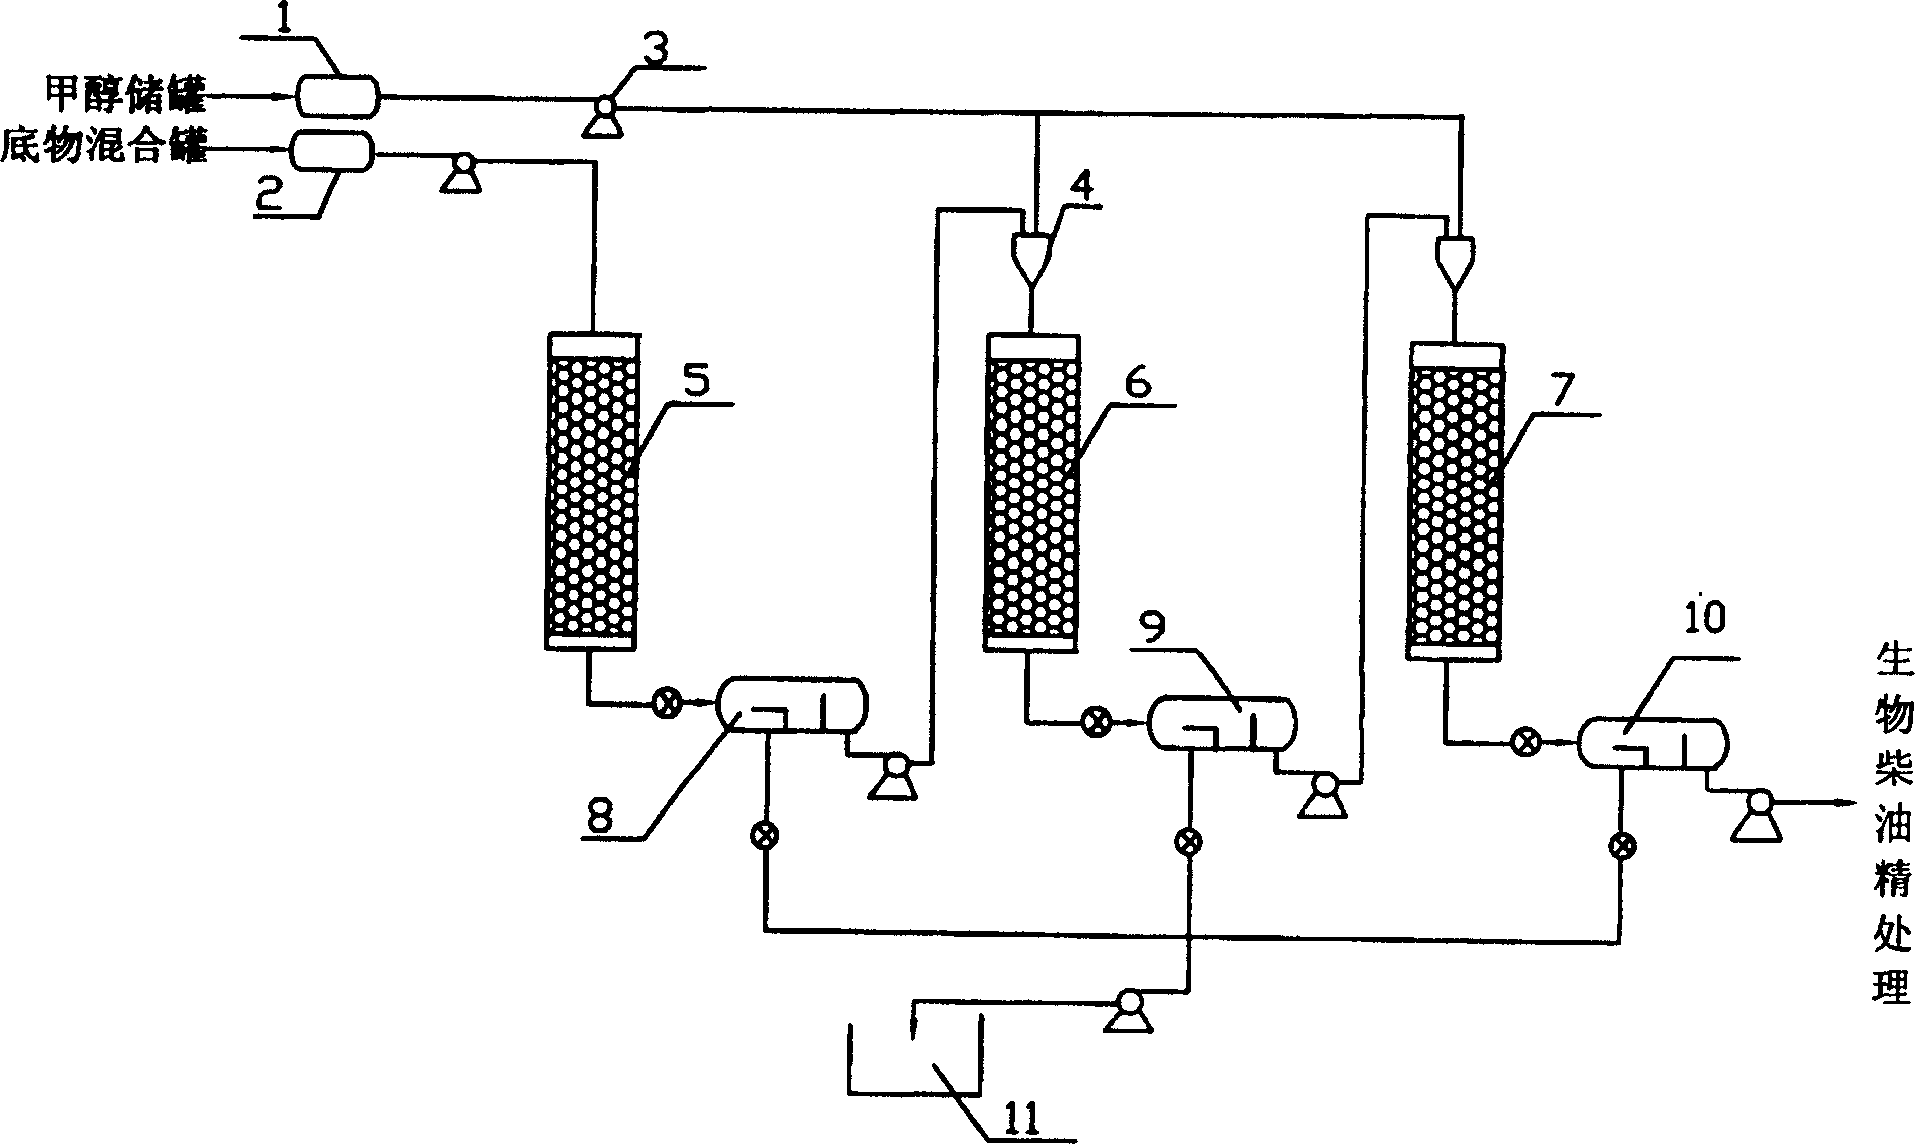 Production method of biological diesel oil